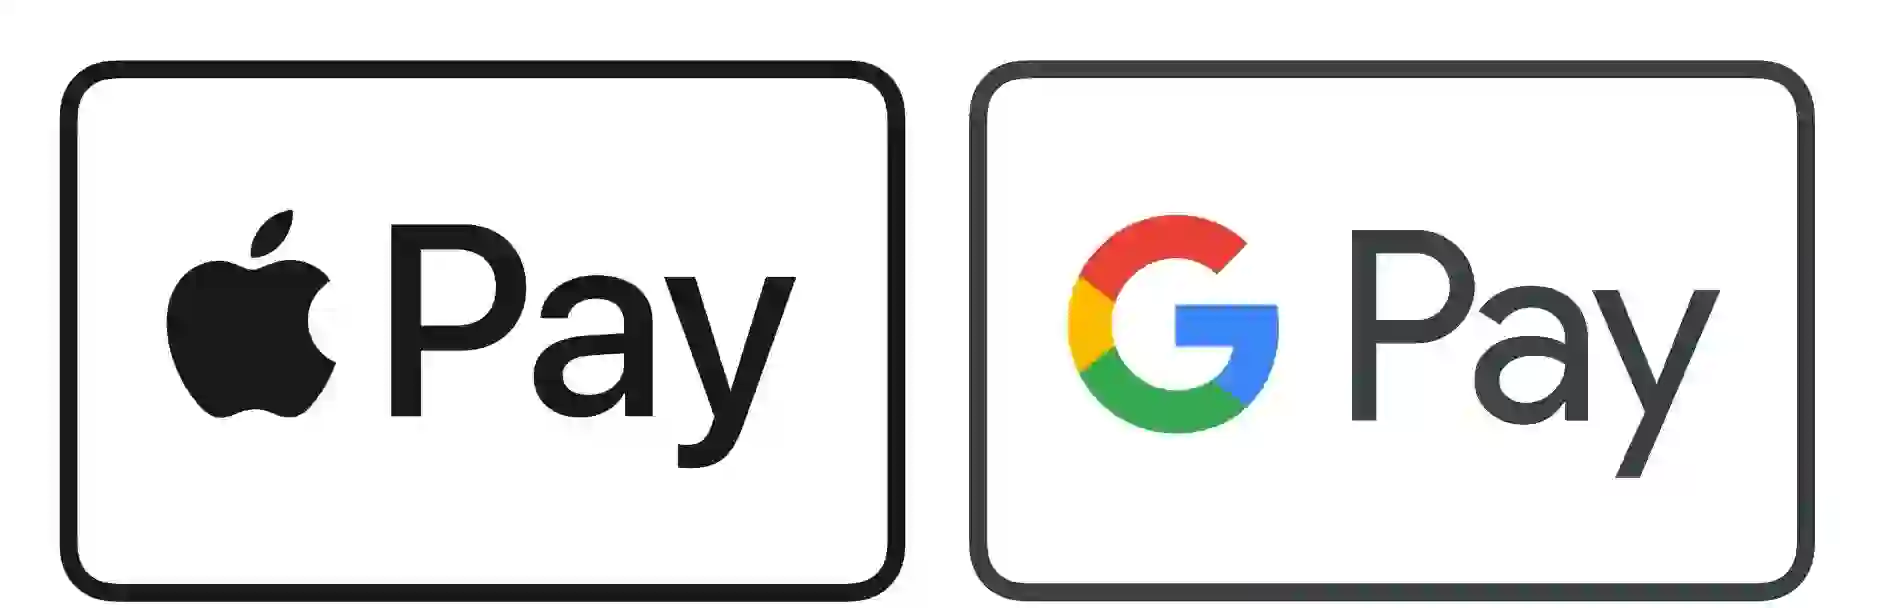 apple google pay logo